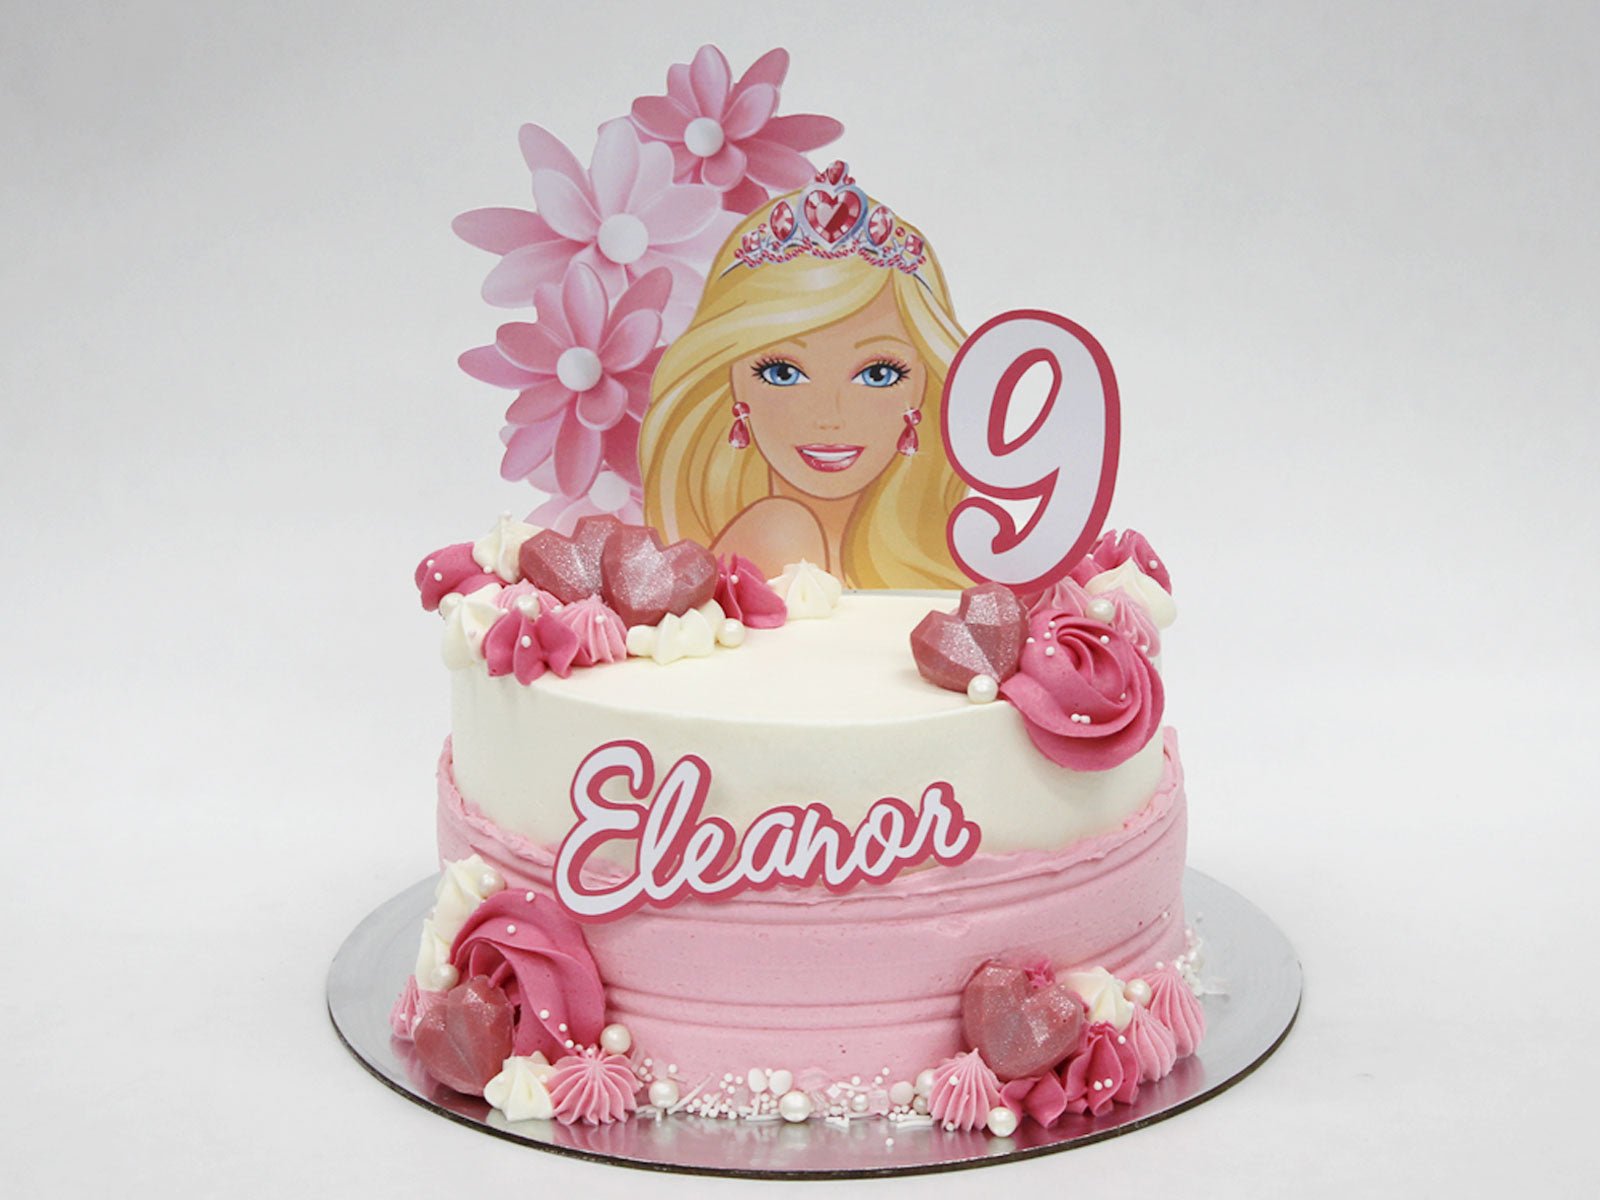 Barbie Cake - 2106 – Cakes and Memories Bakeshop